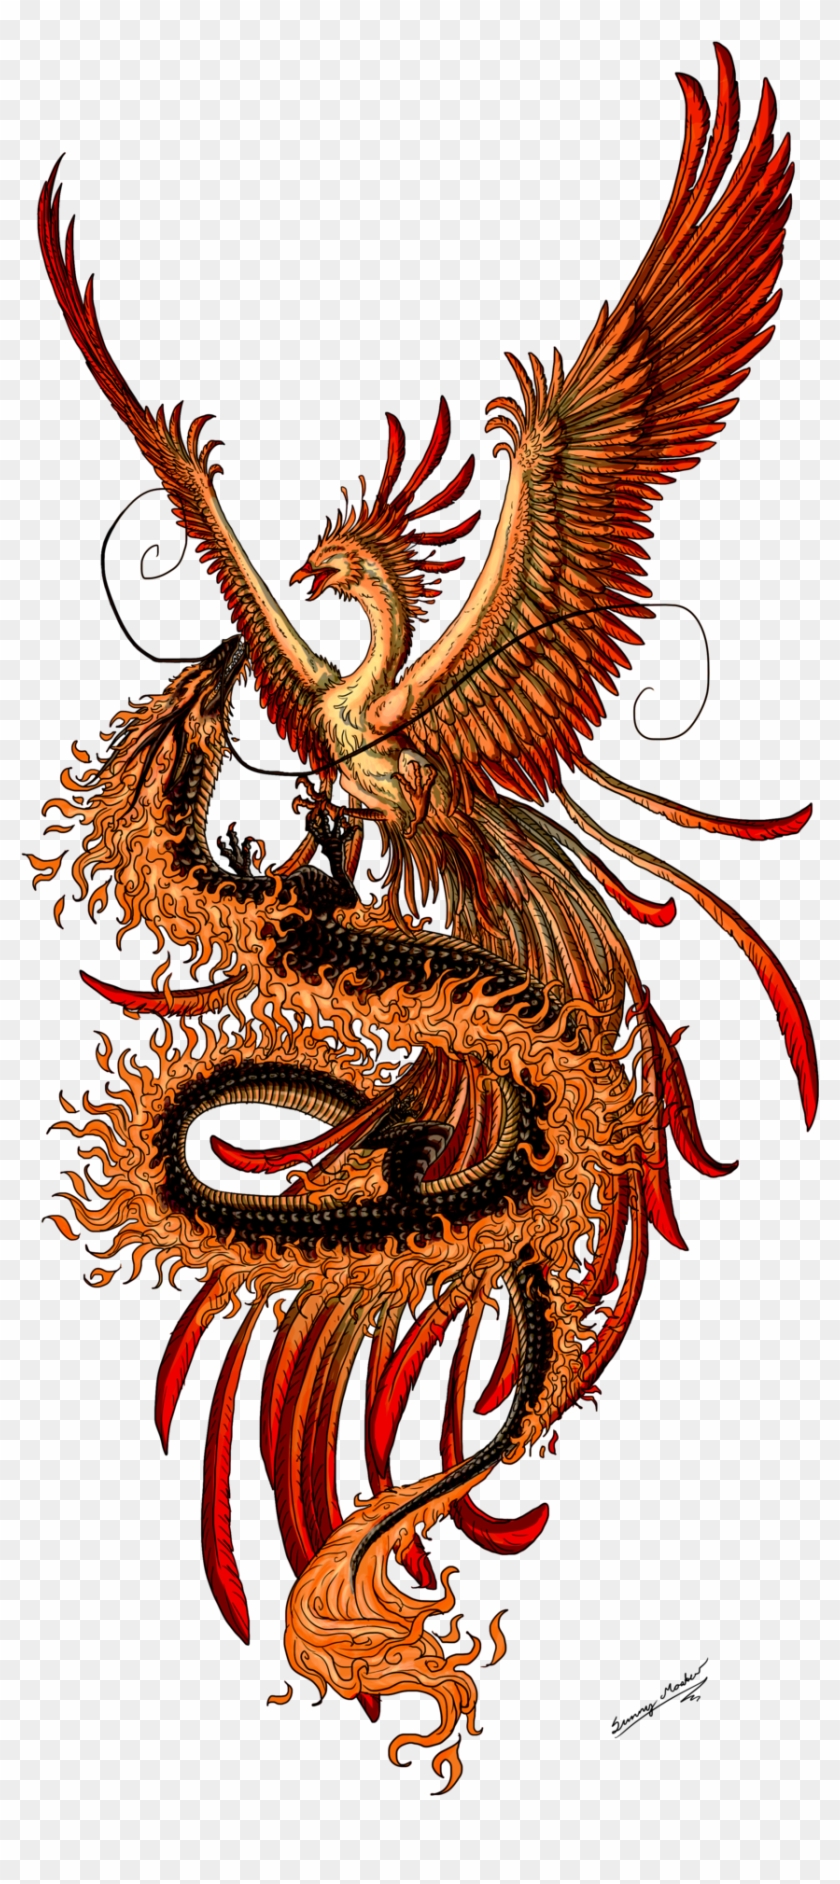 Phoenix Tattoo Designs Female - Tribal Phoenix Transparent PNG - 489x692 -  Free Download on NicePNG